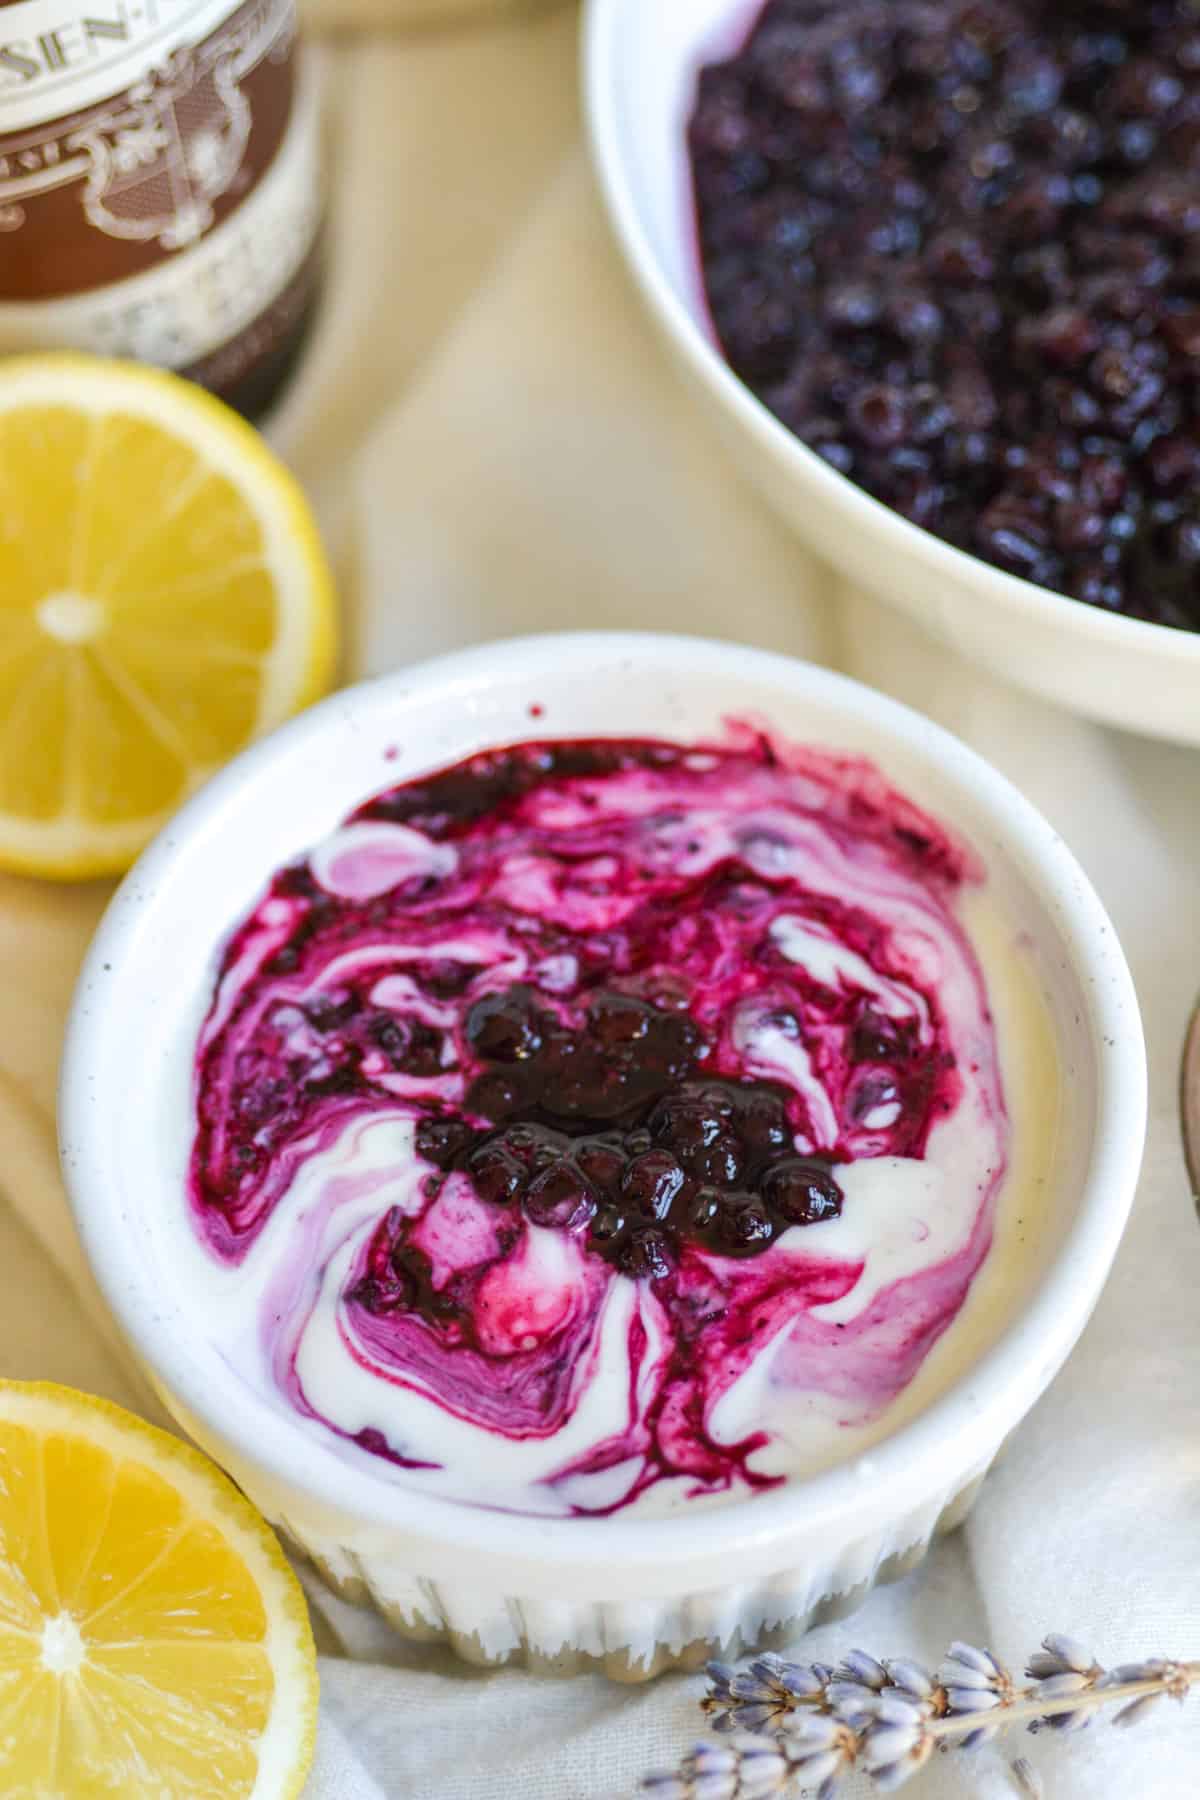 A small ramekin with yogurt in it swirled with blueberry compote.